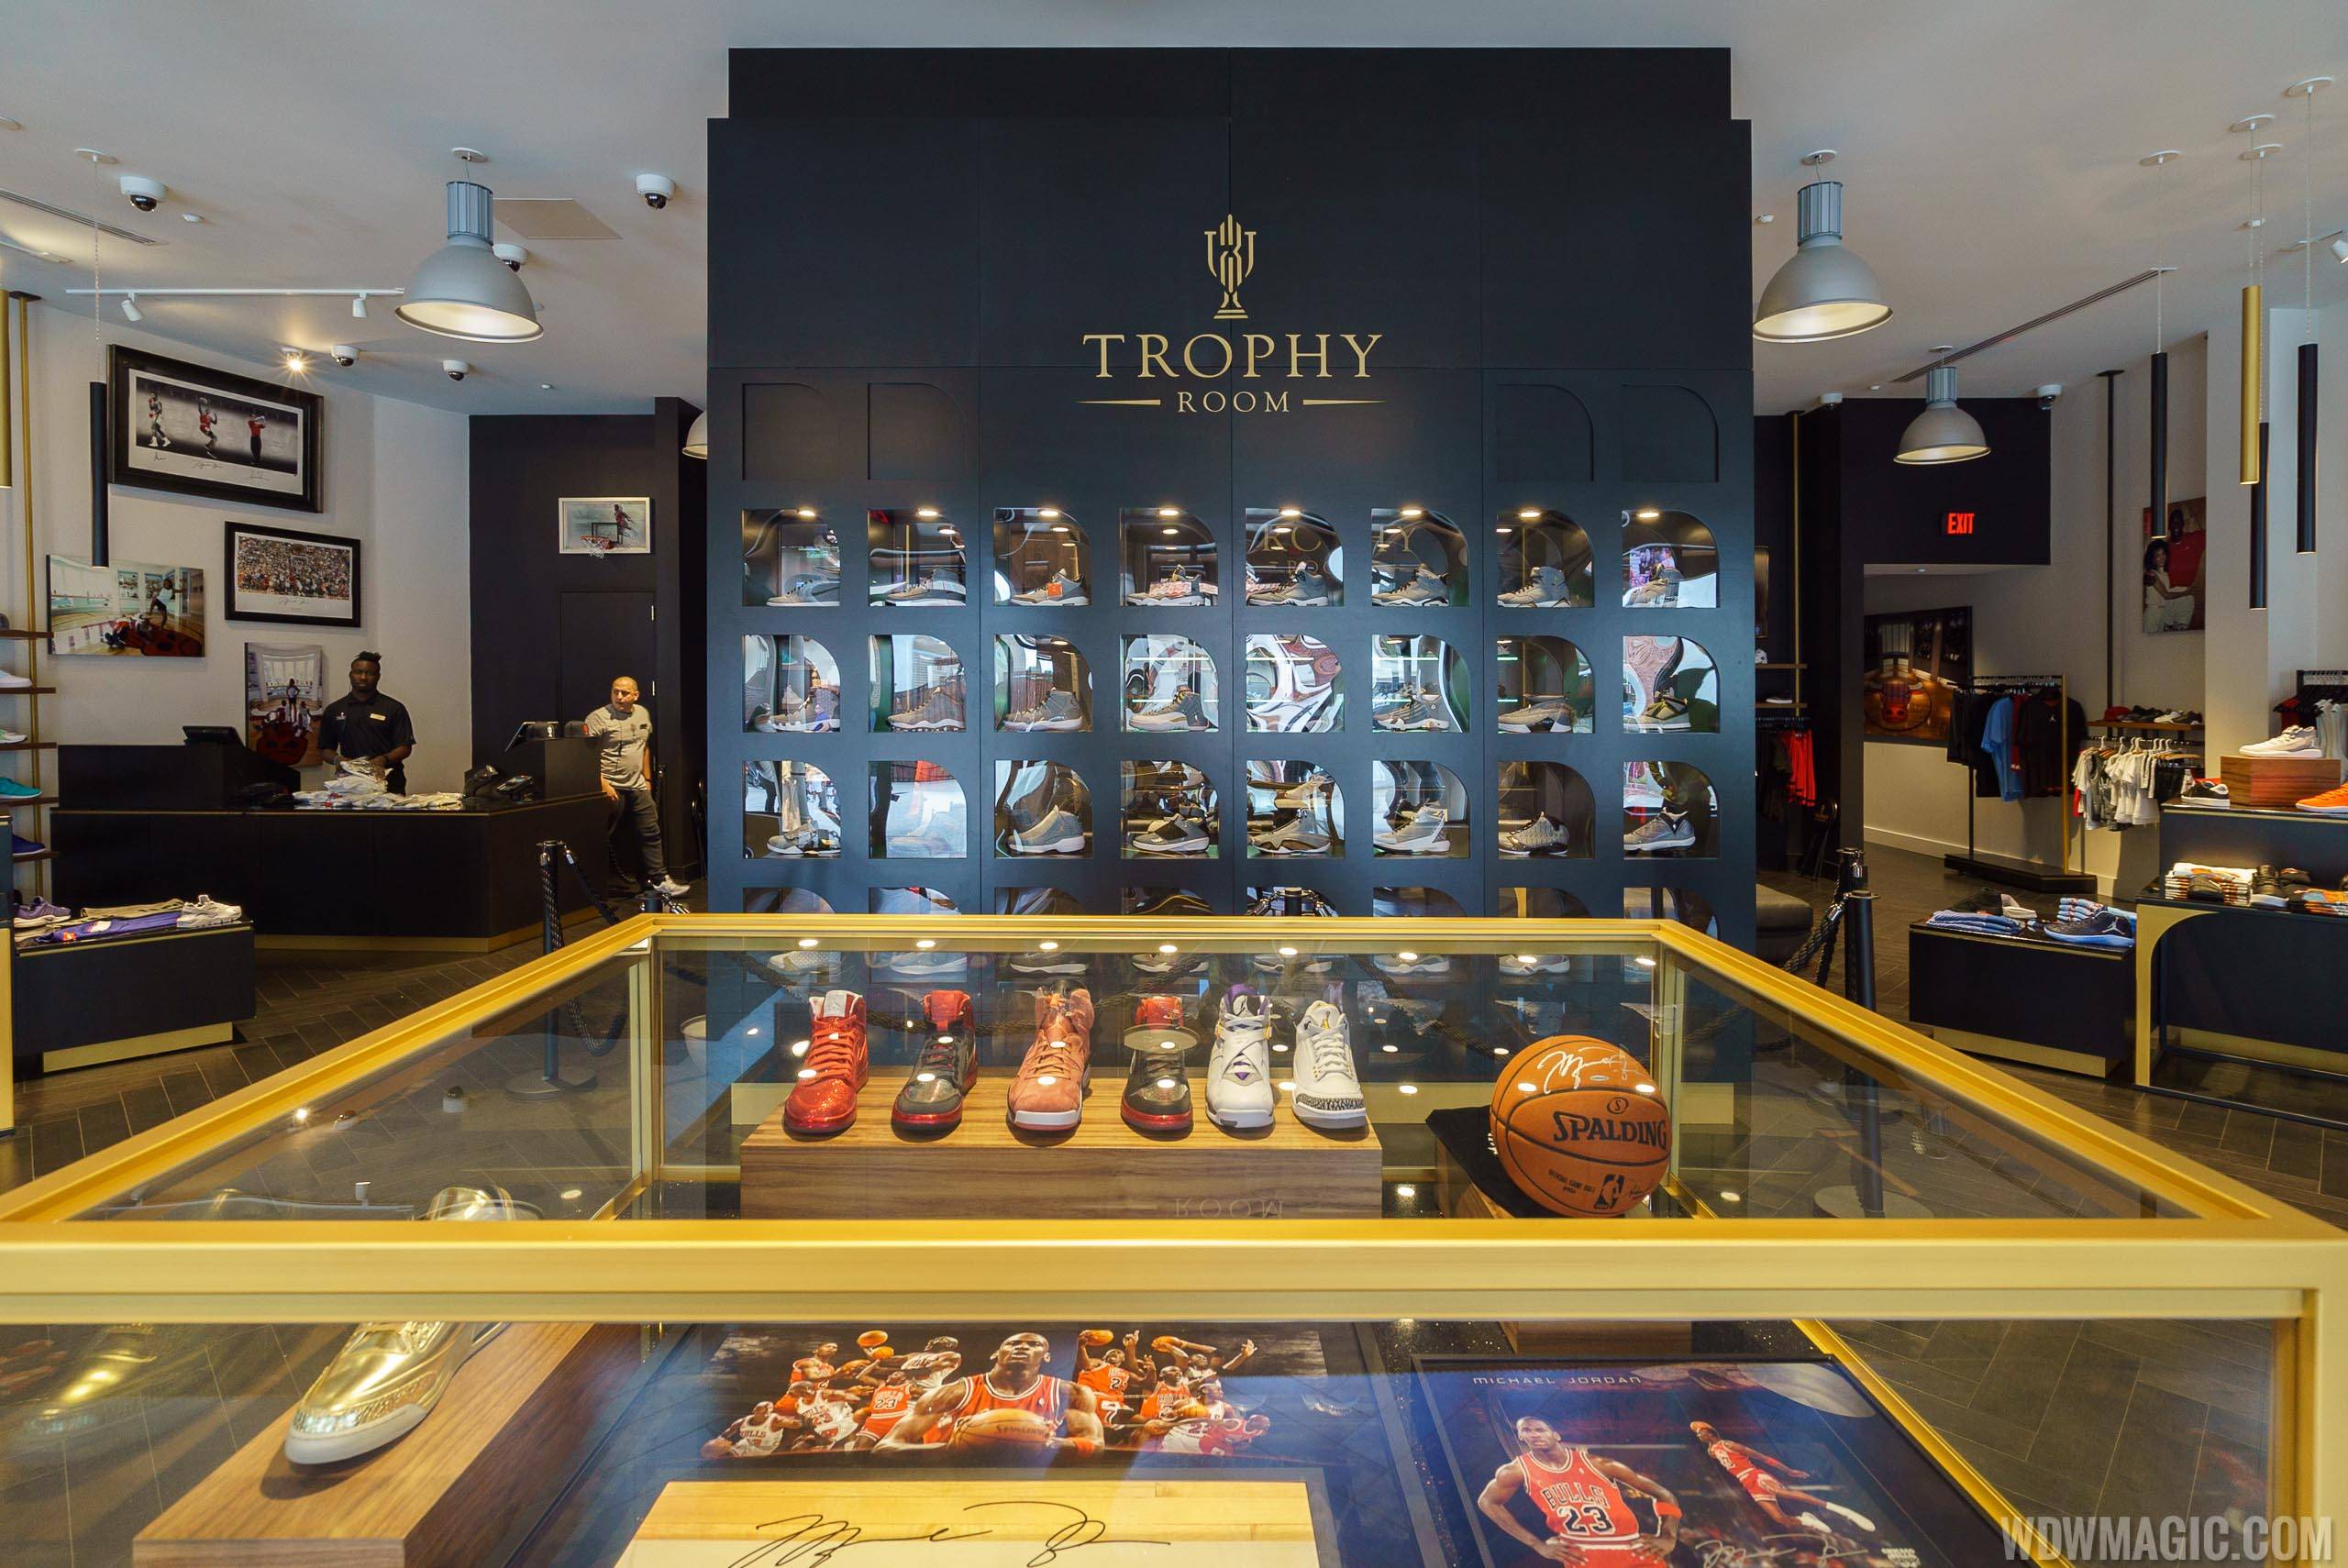 Trophy Room overview